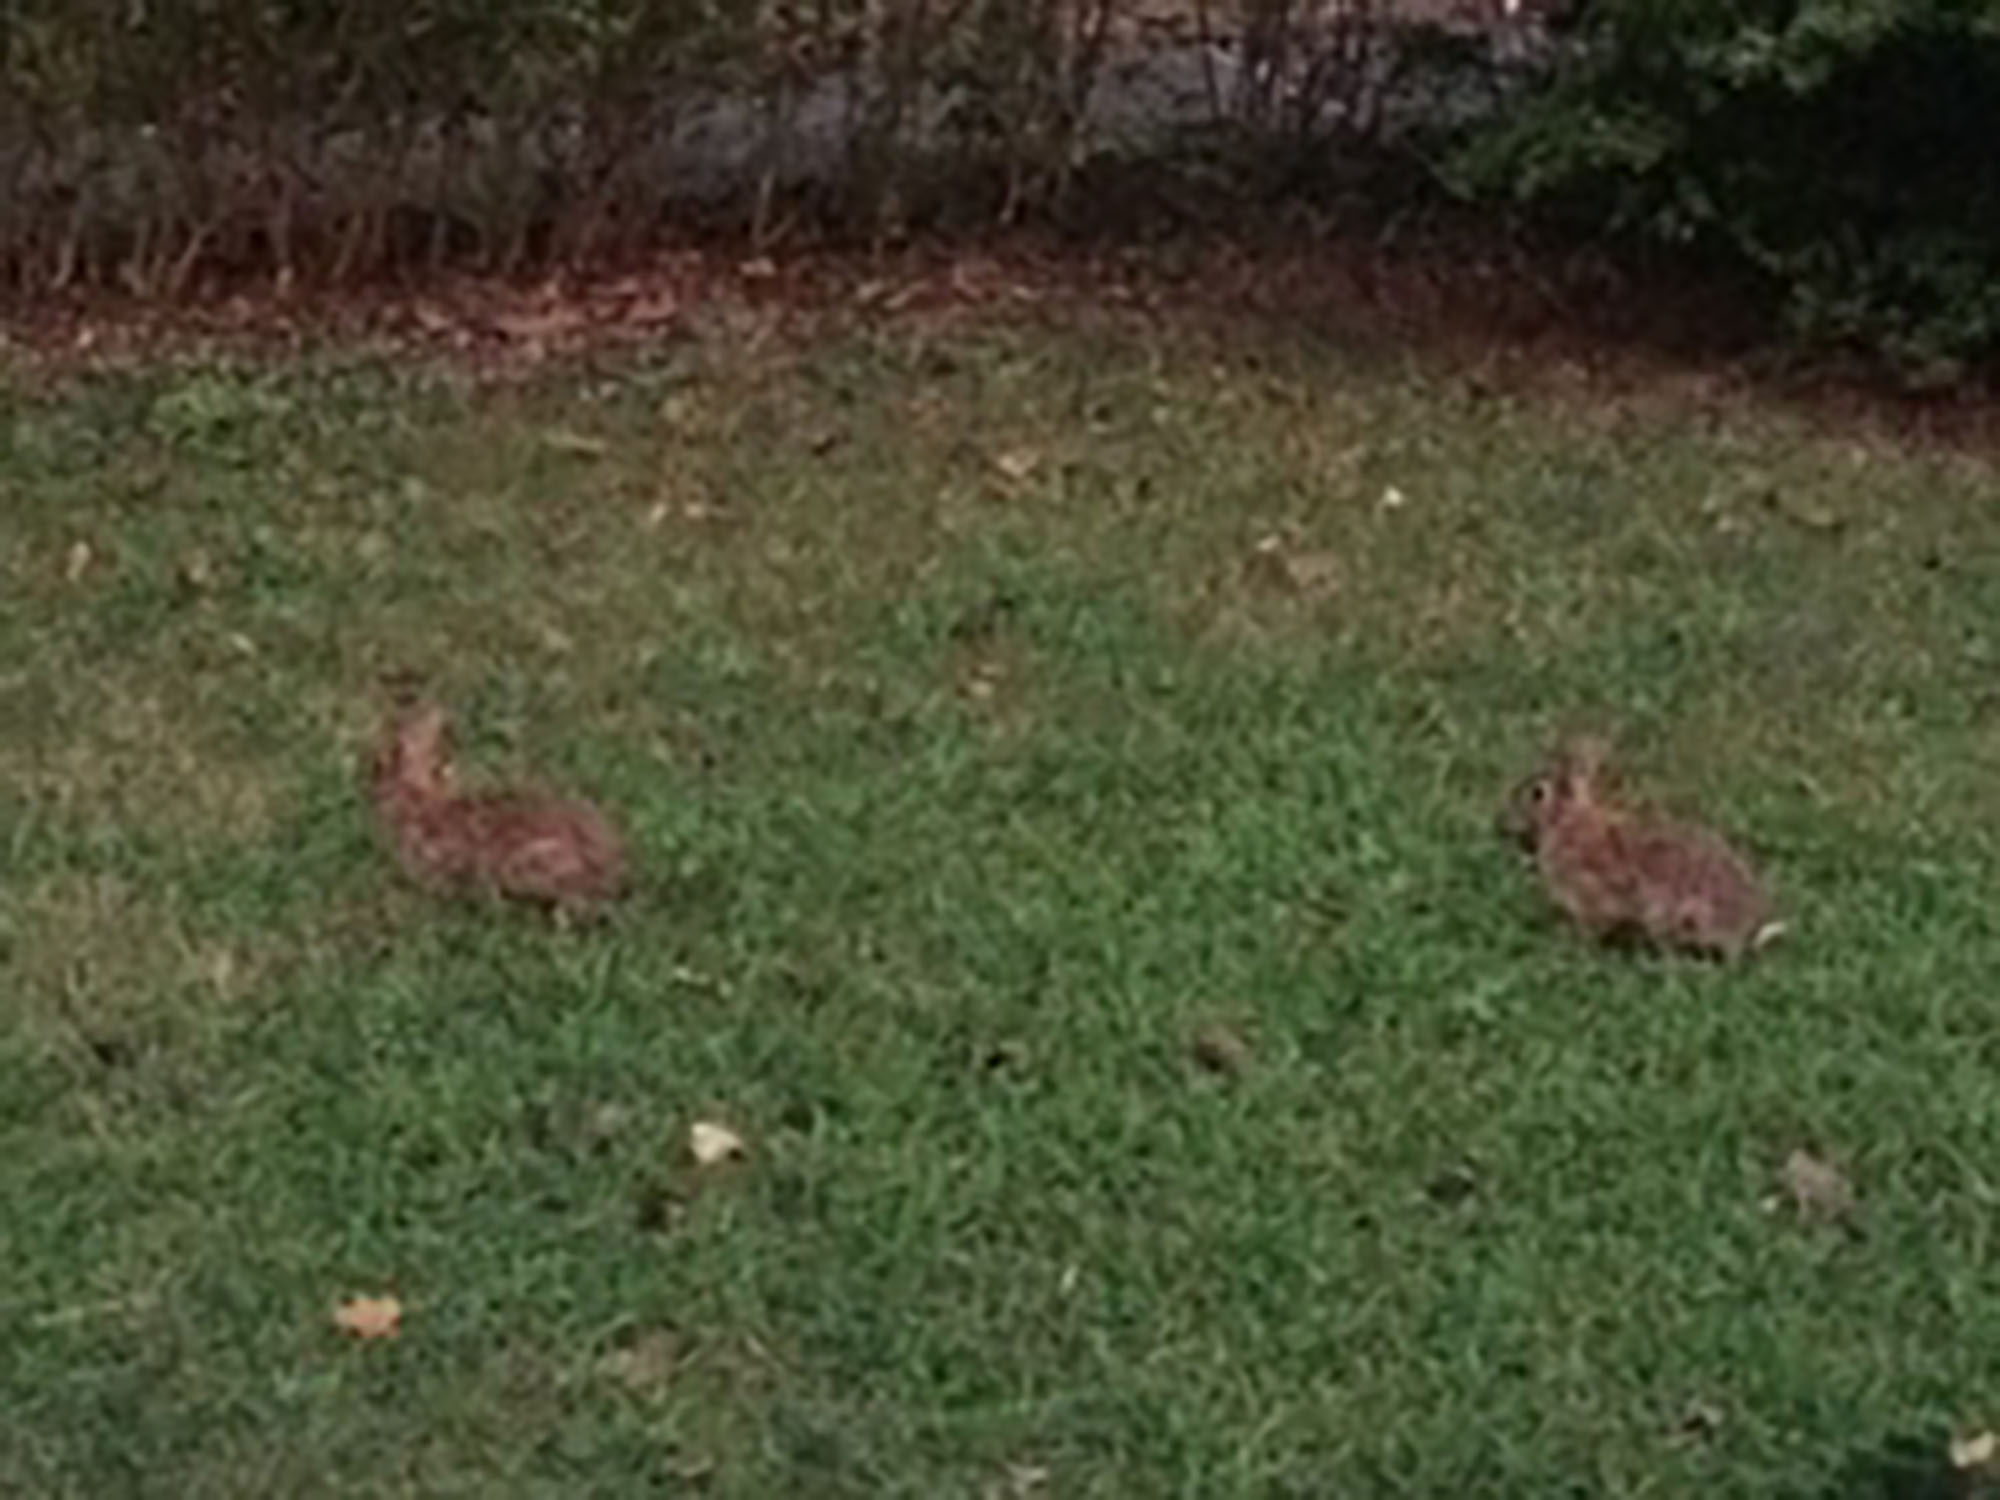 8-16 w-wildlife-two bunnies Anckaitis.jpg